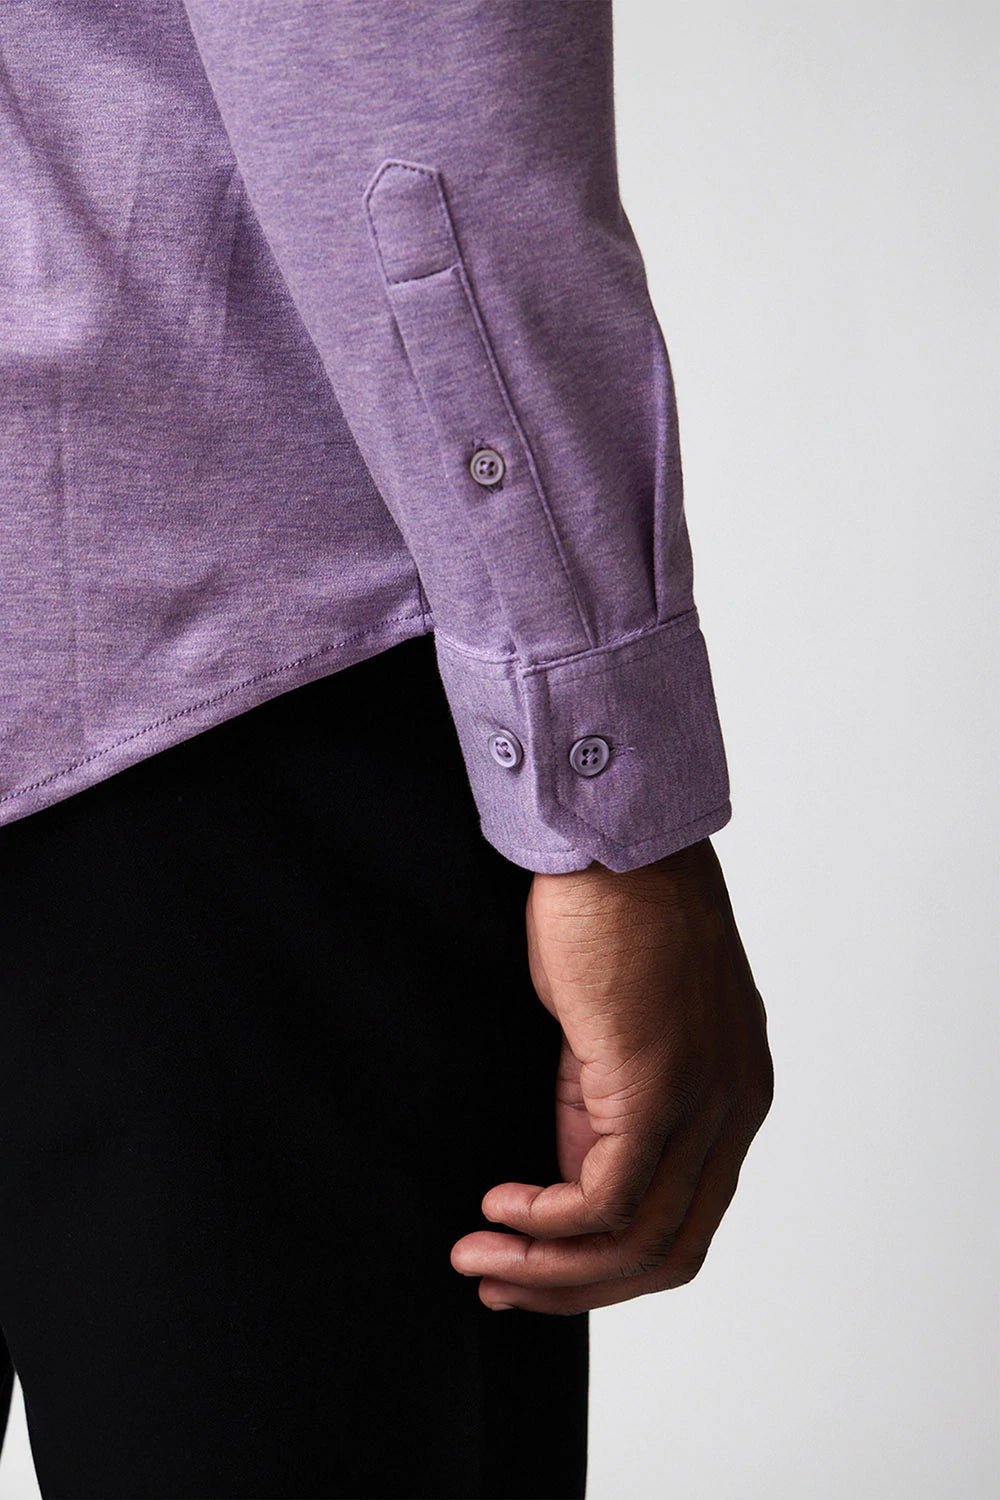 Raffi Long Sleeve Button up Front - My Filosophy